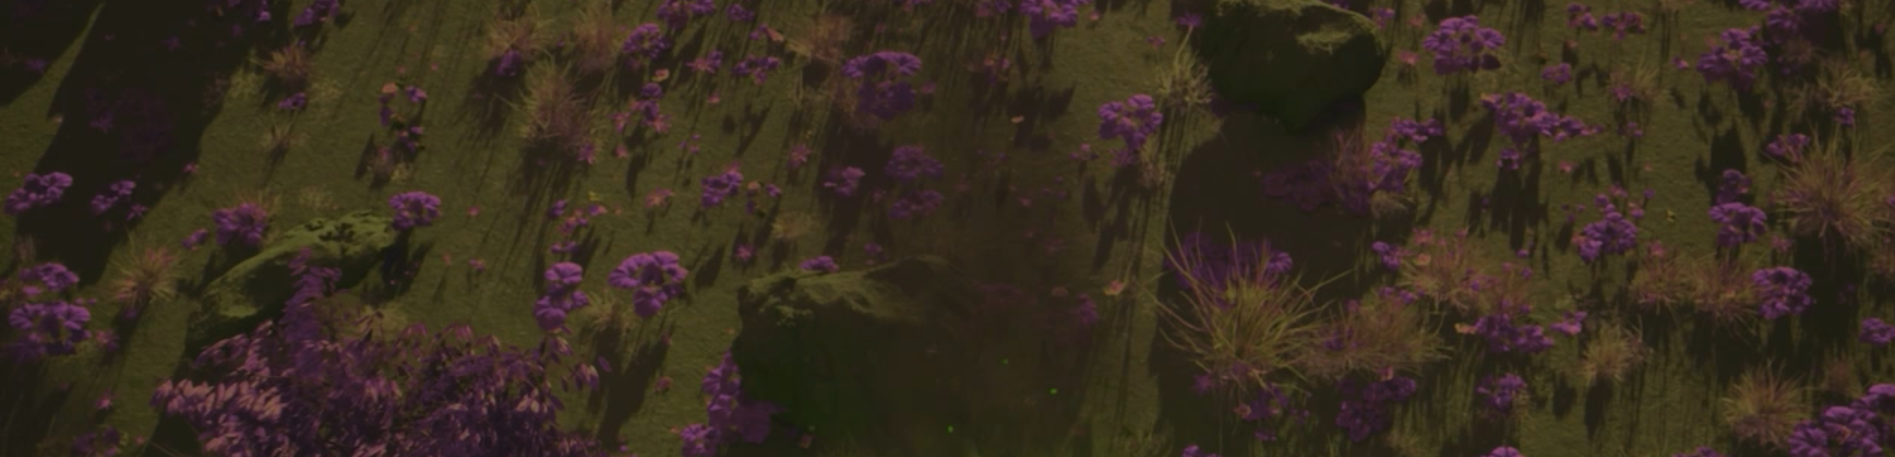 Animation shot by Jaewook Lee of purple flowers in a green field.